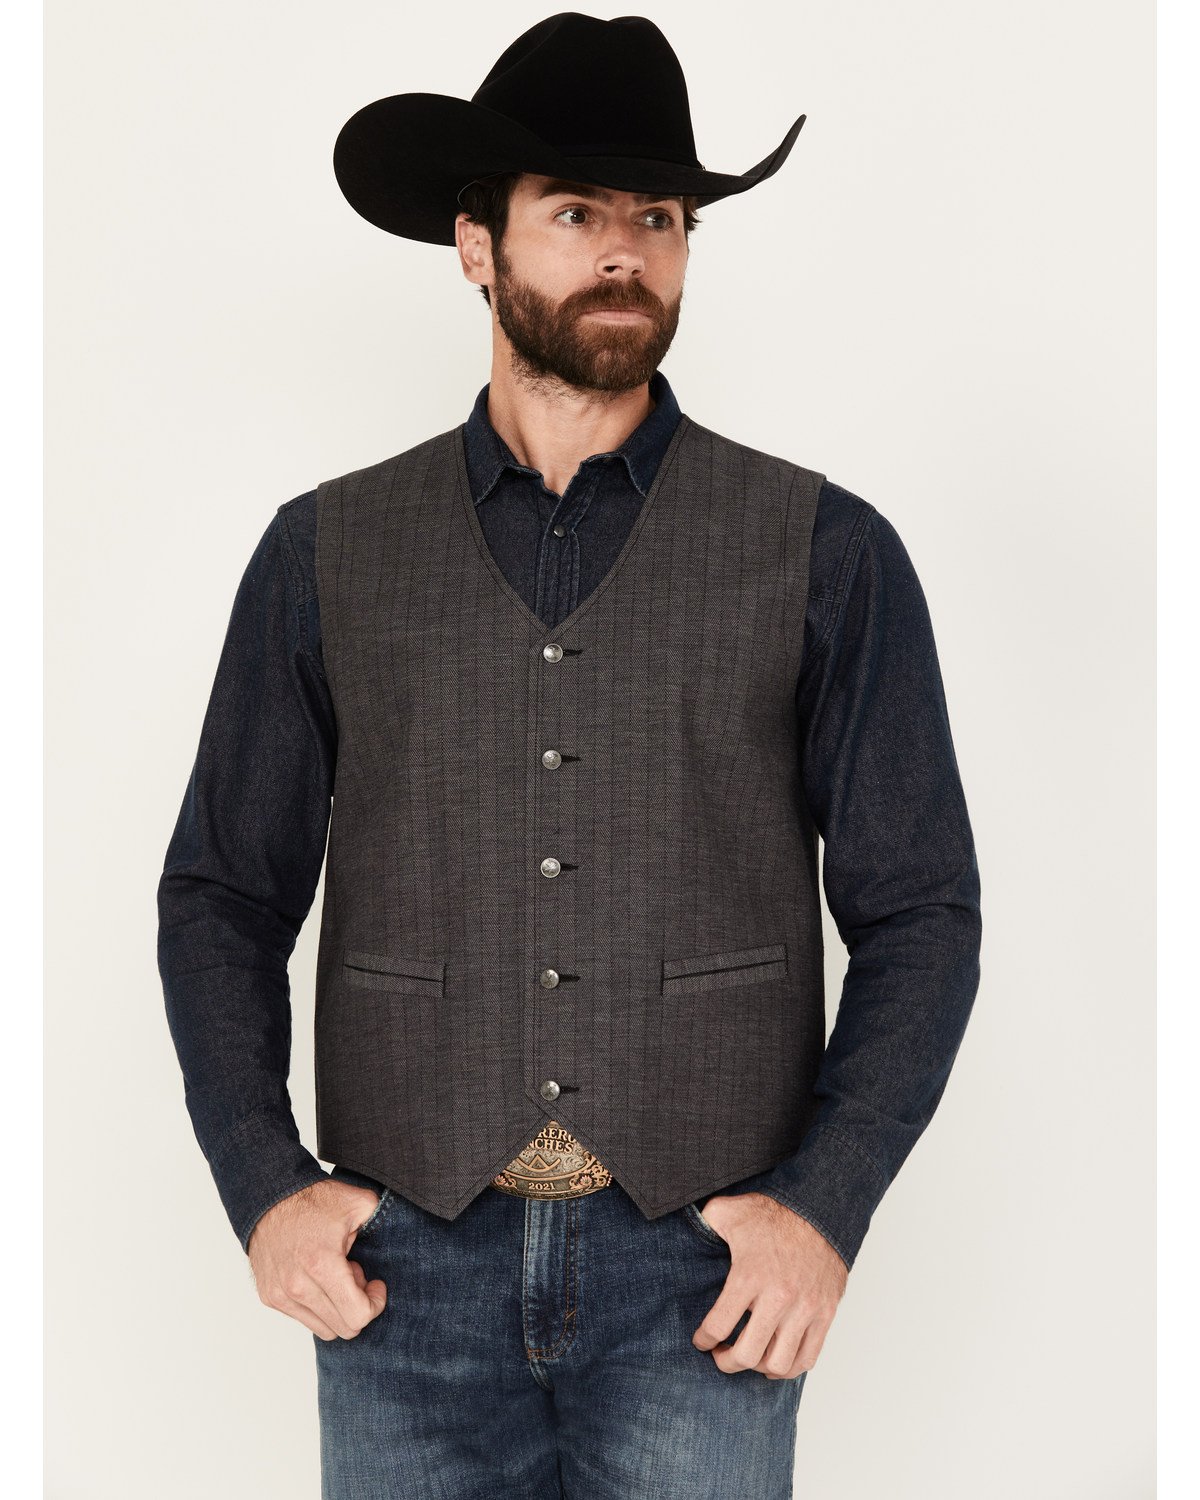 Moonshine Spirit Men's Herringbone Button-Down Wool Vest